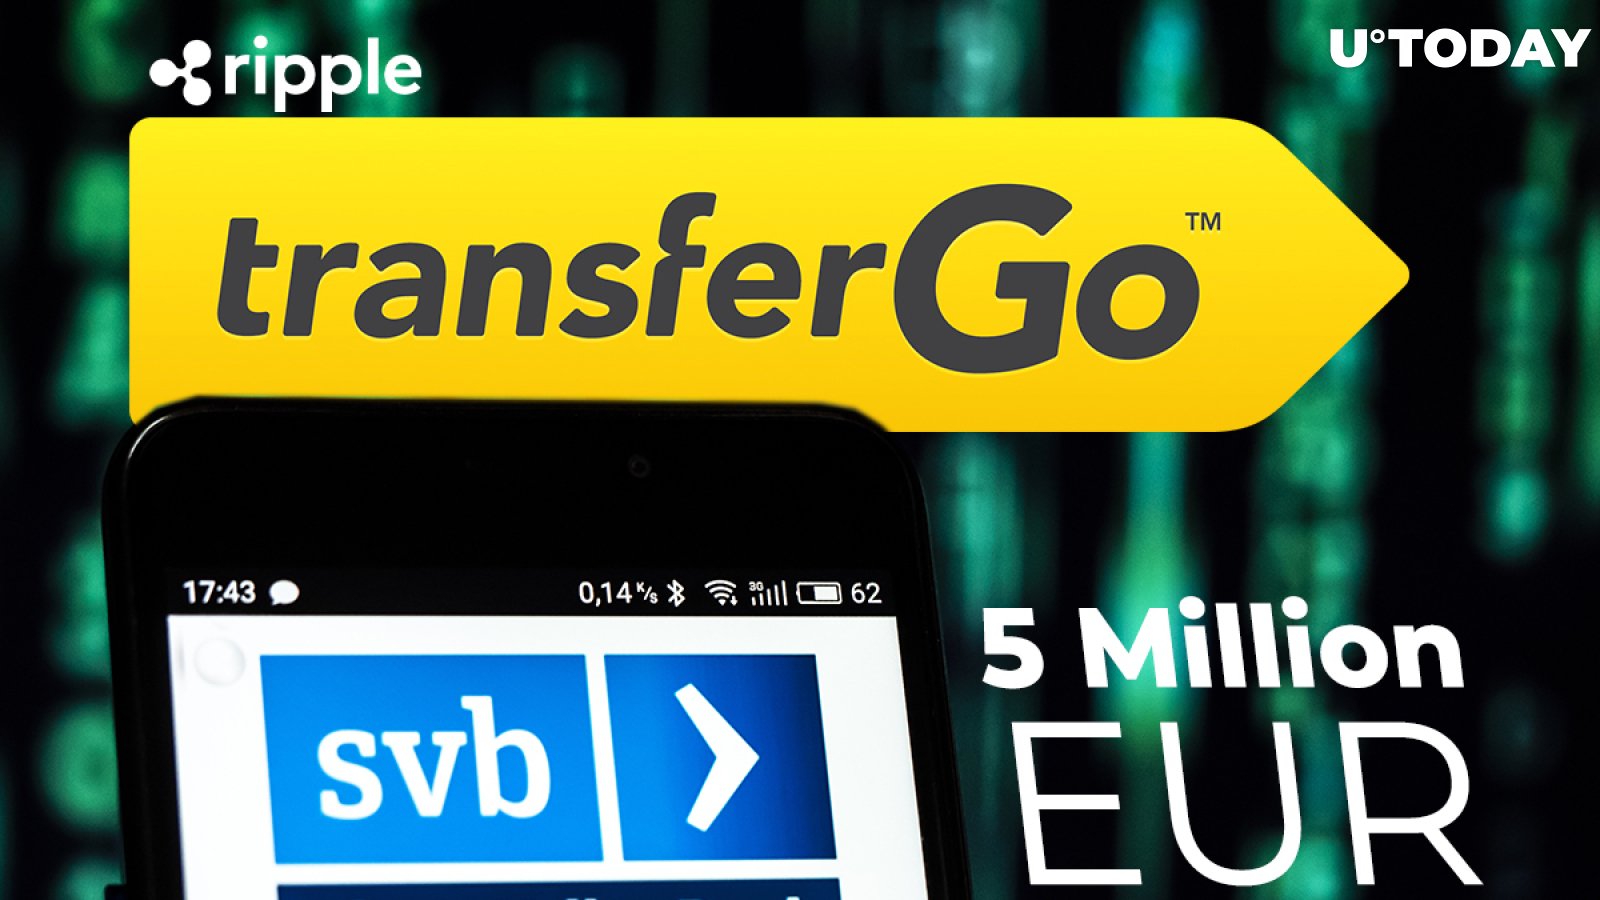 Ripple Partner TransferGo Rakes in 5 Million EUR from Silicon Valley Bank